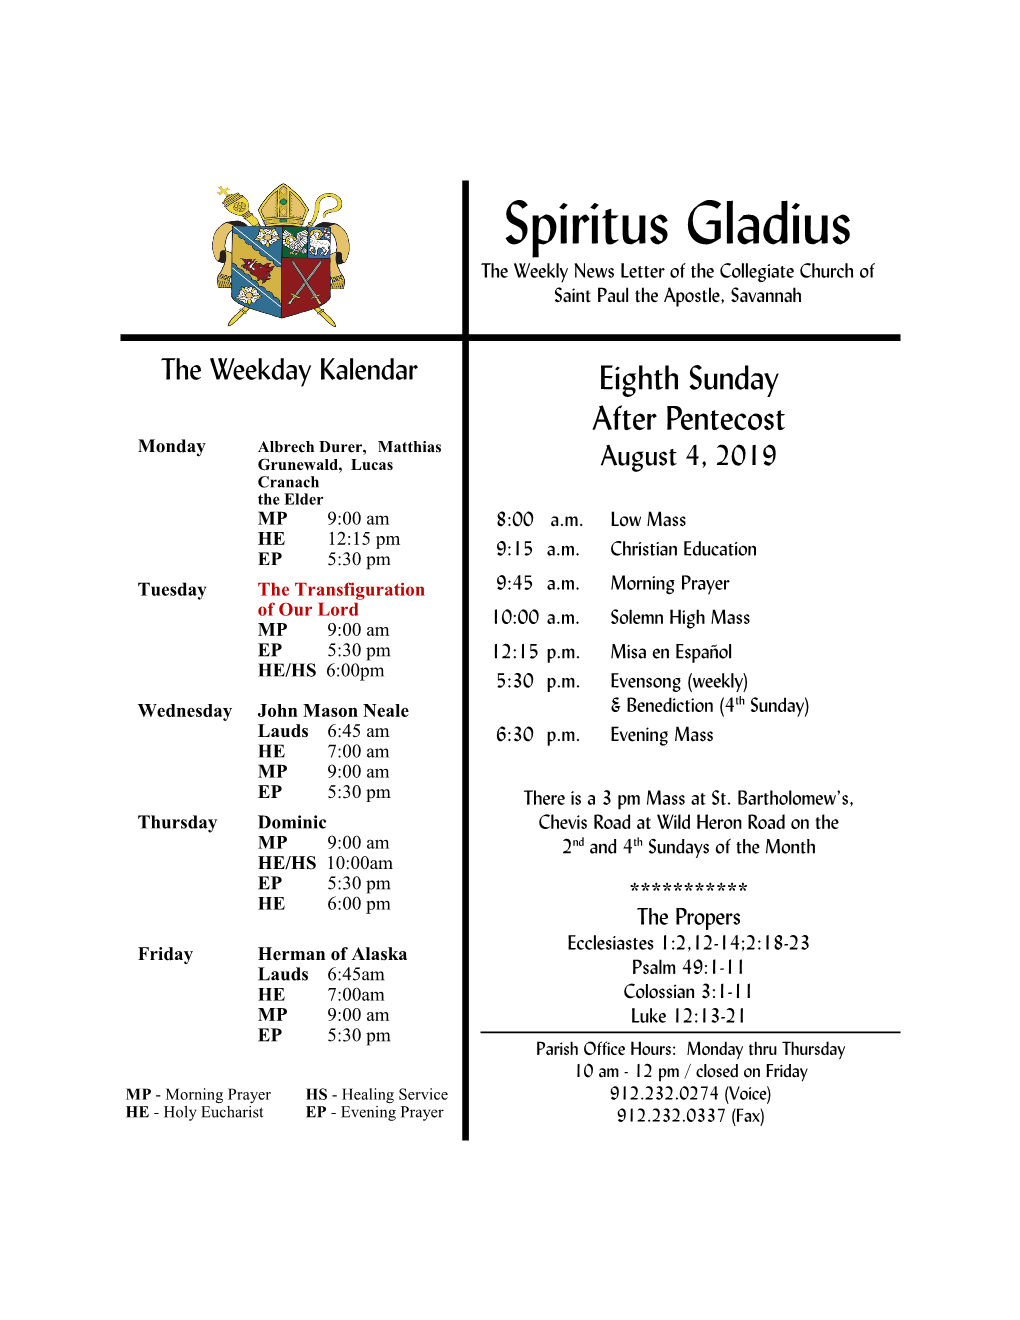 Spiritus Gladius the Weekly News Letter of the Collegiate Church of Saint Paul the Apostle, Savannah